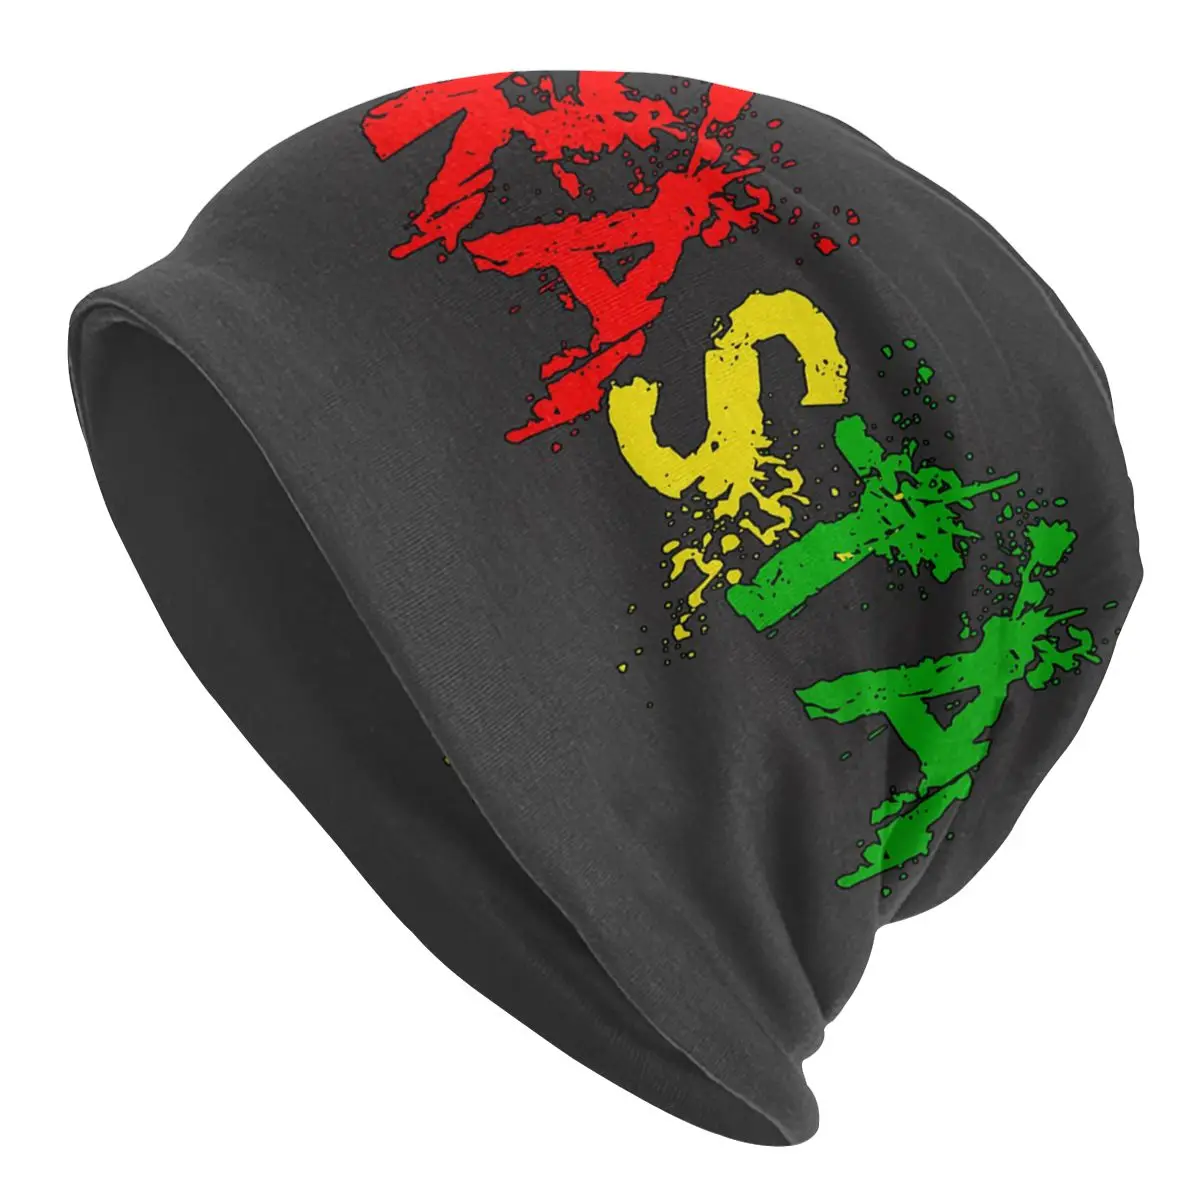 Jamaica Reggae Gorro Rasta Style Cappello Cap Fashion Outdoor Skullies Beanies Hat Unisex Adult Warm Dual-use Bonnet Knitted Hat